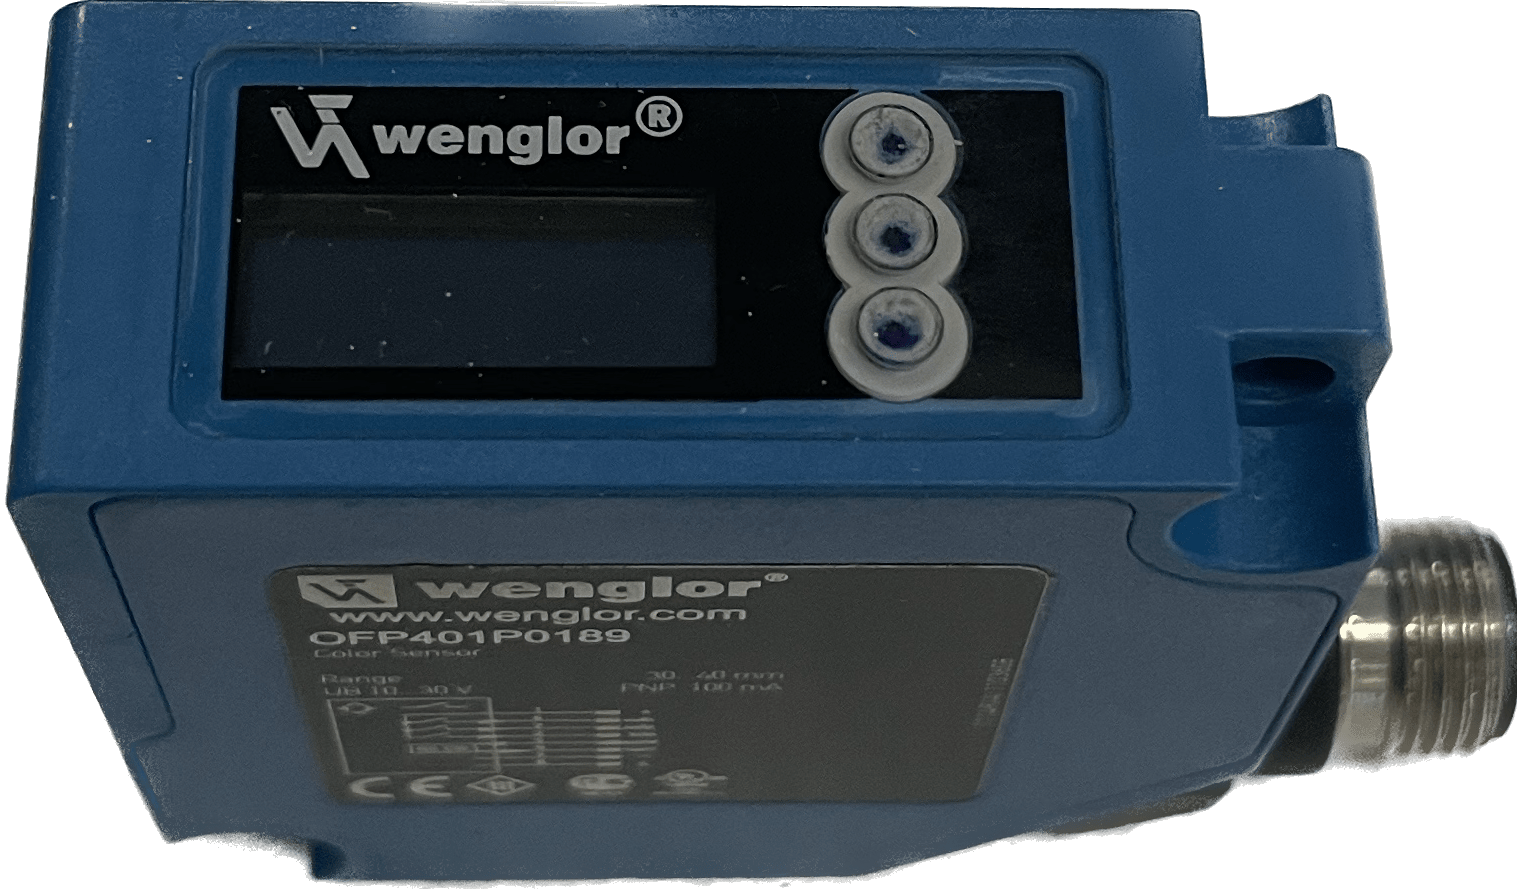 Wenglor OFP401P0189 - #product_category# | Klenk Maschinenhandel